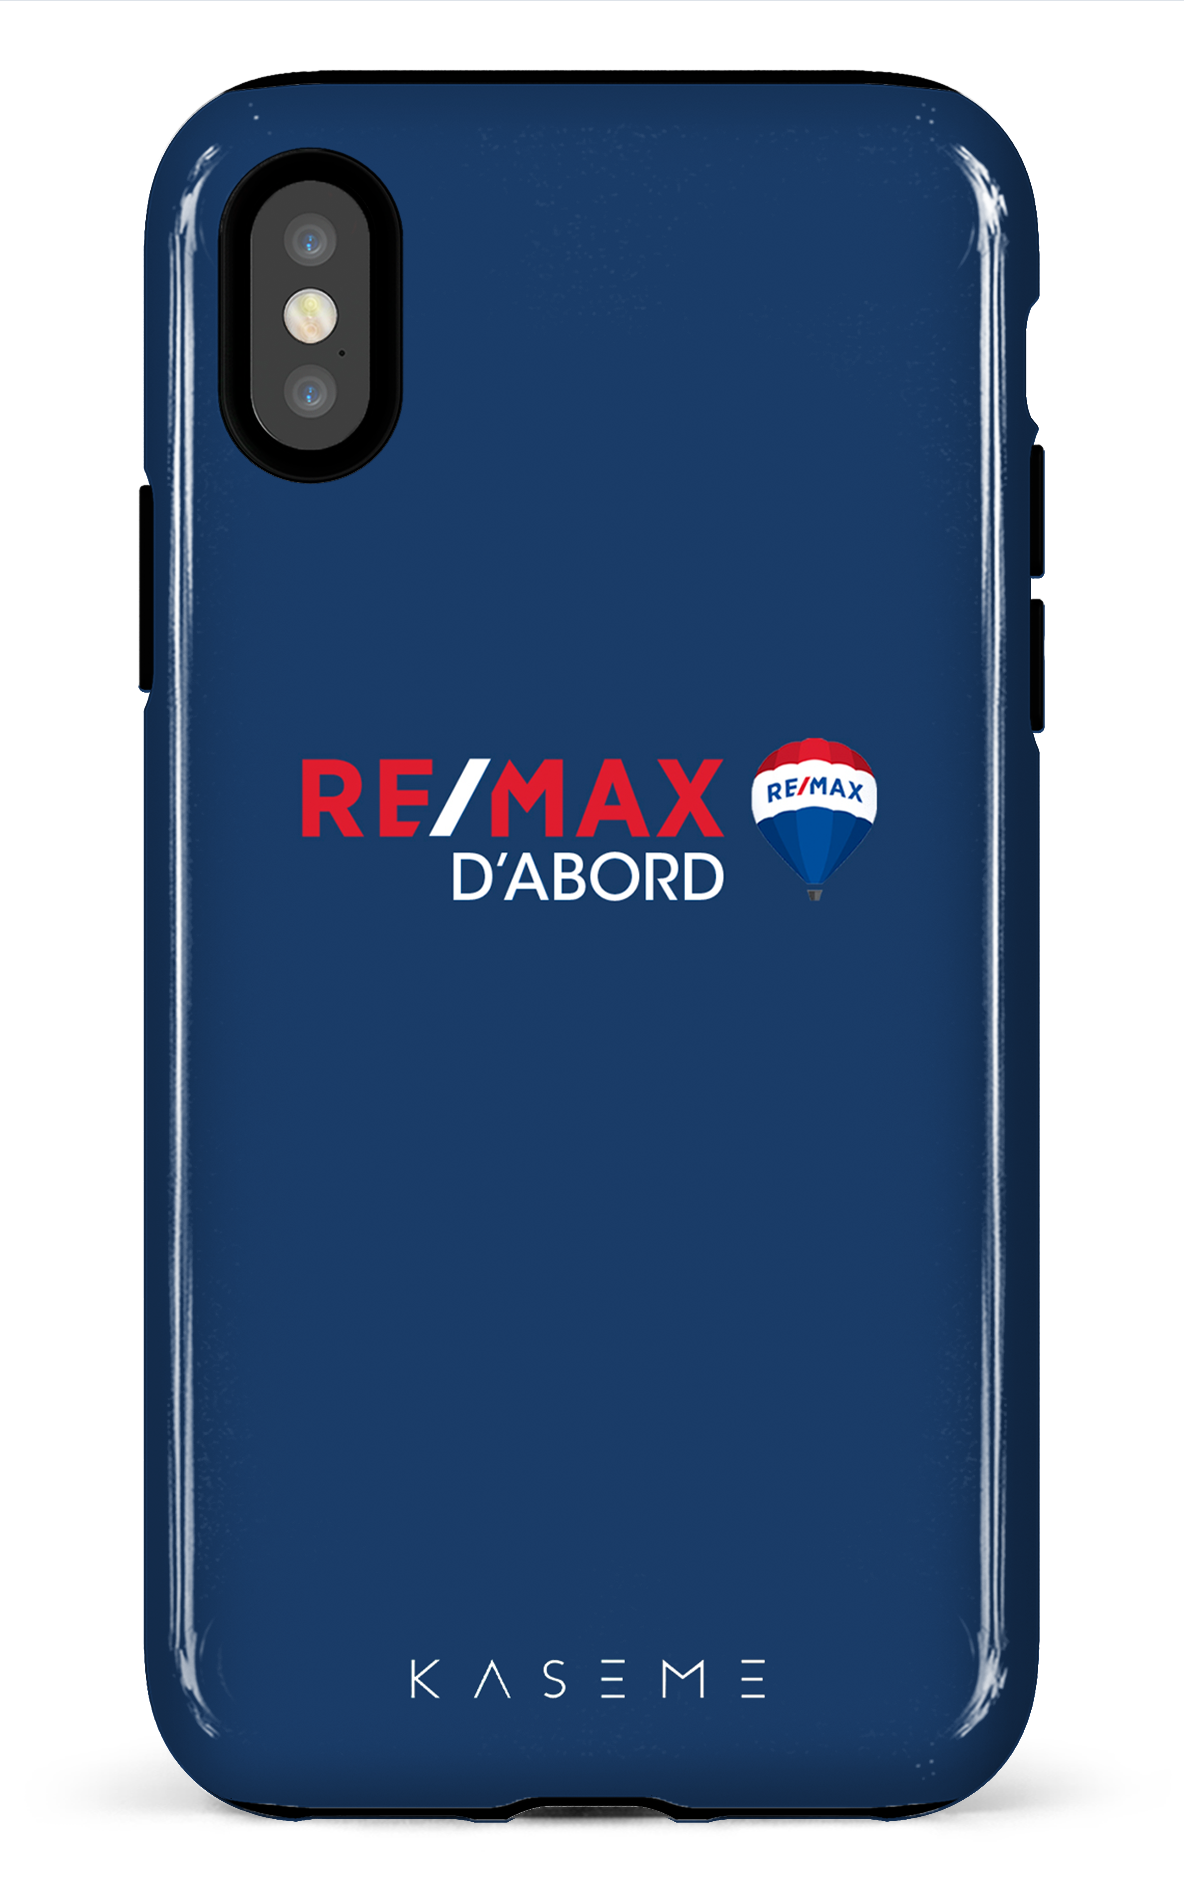 Remax D'abord Bleu - iPhone X/XS